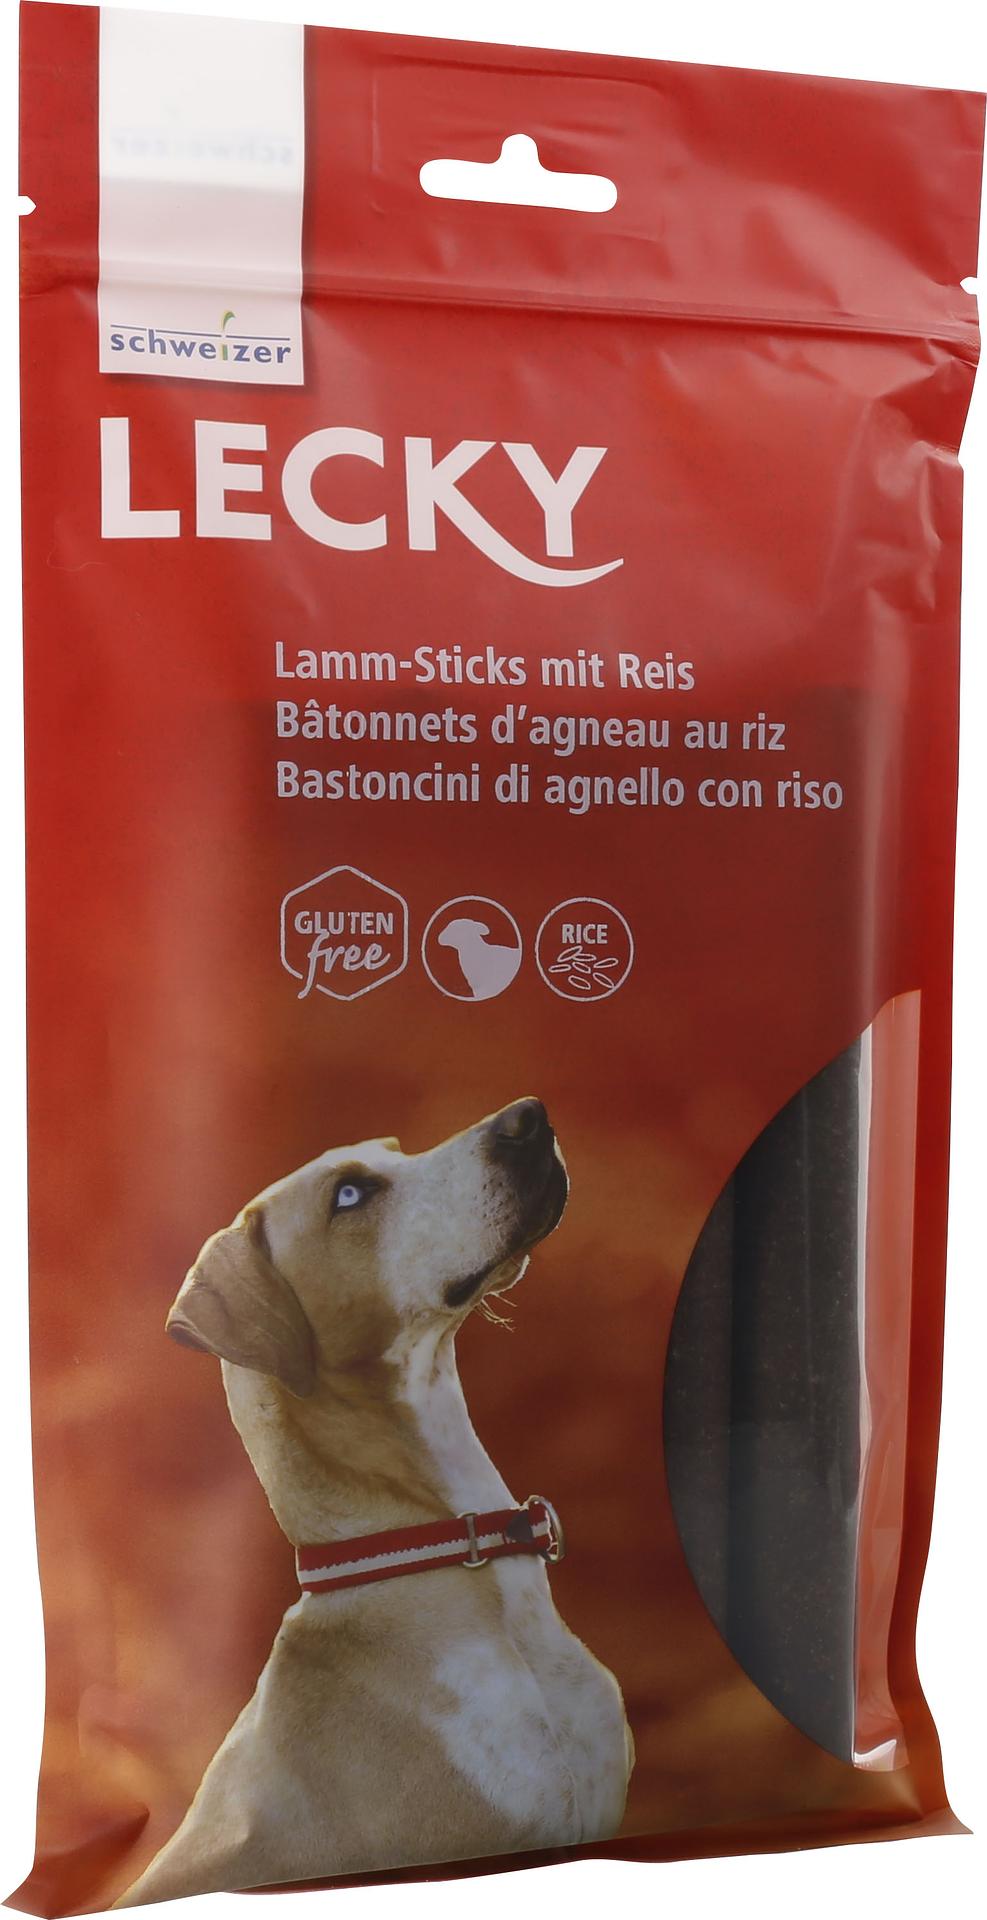 Lecky Lamm-Sticks mit Reis, 275g